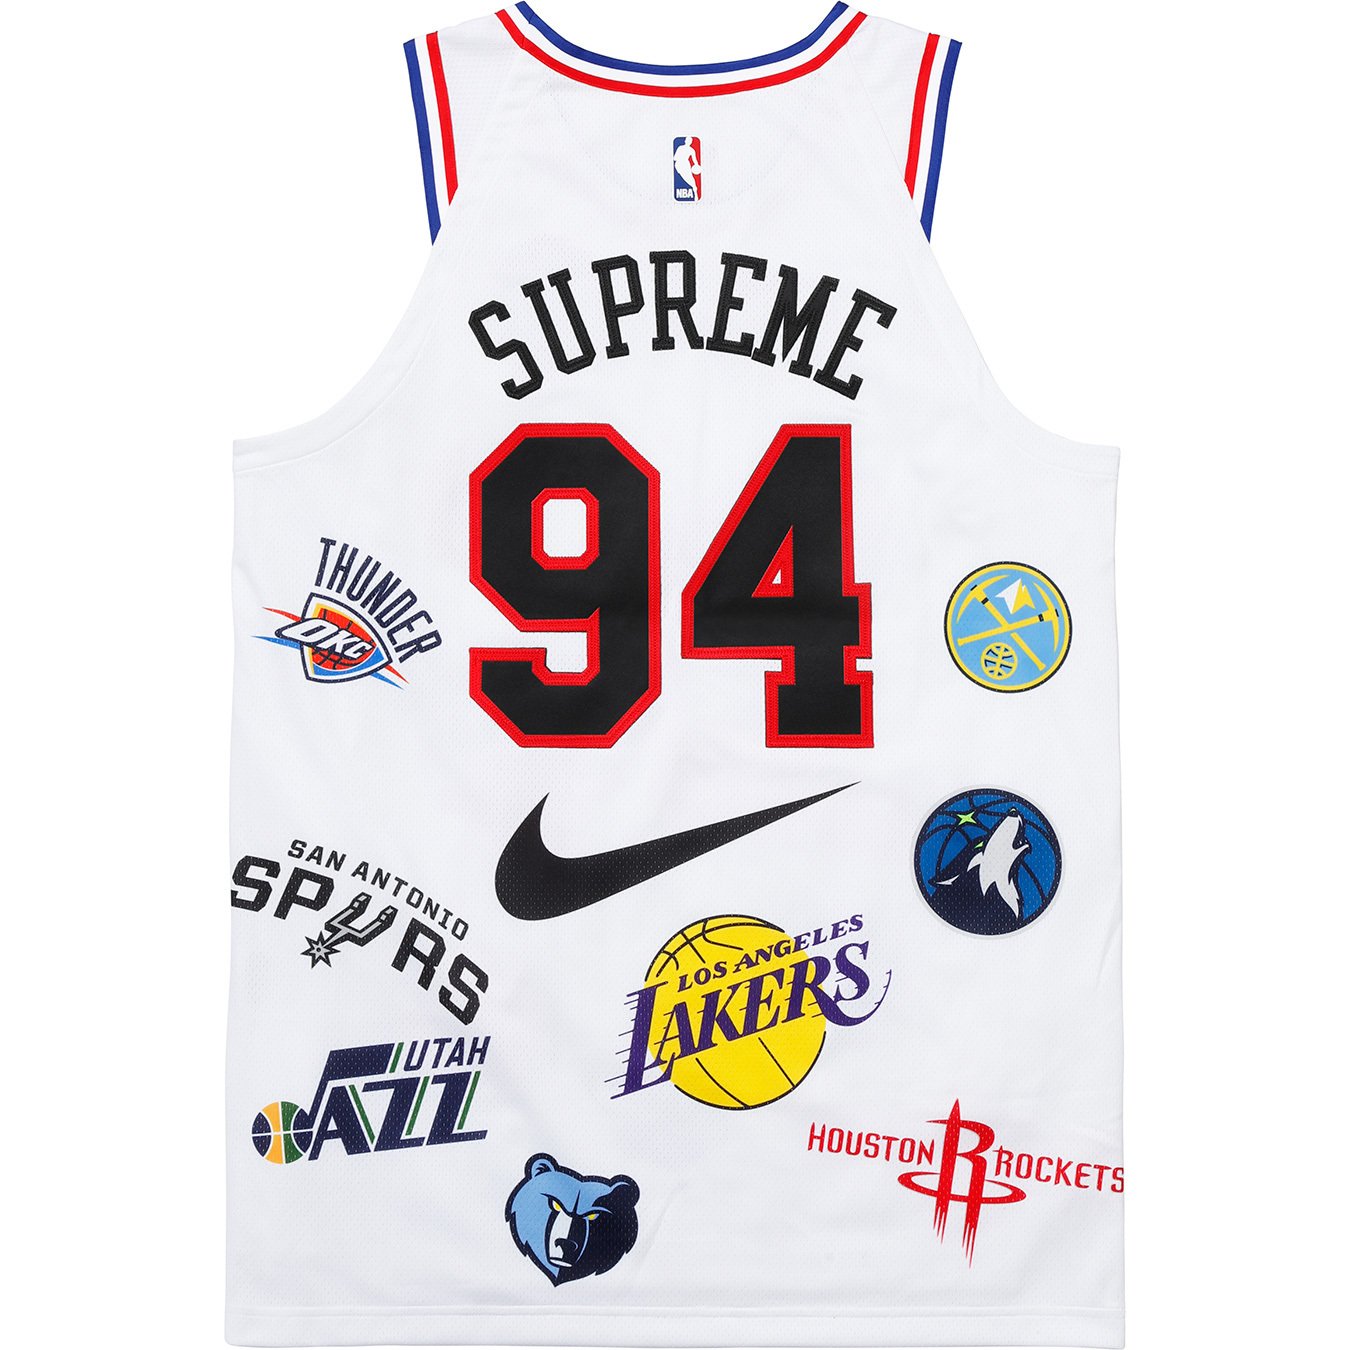 2018 Supreme Nike NBA Teams Authentic Jersey Black